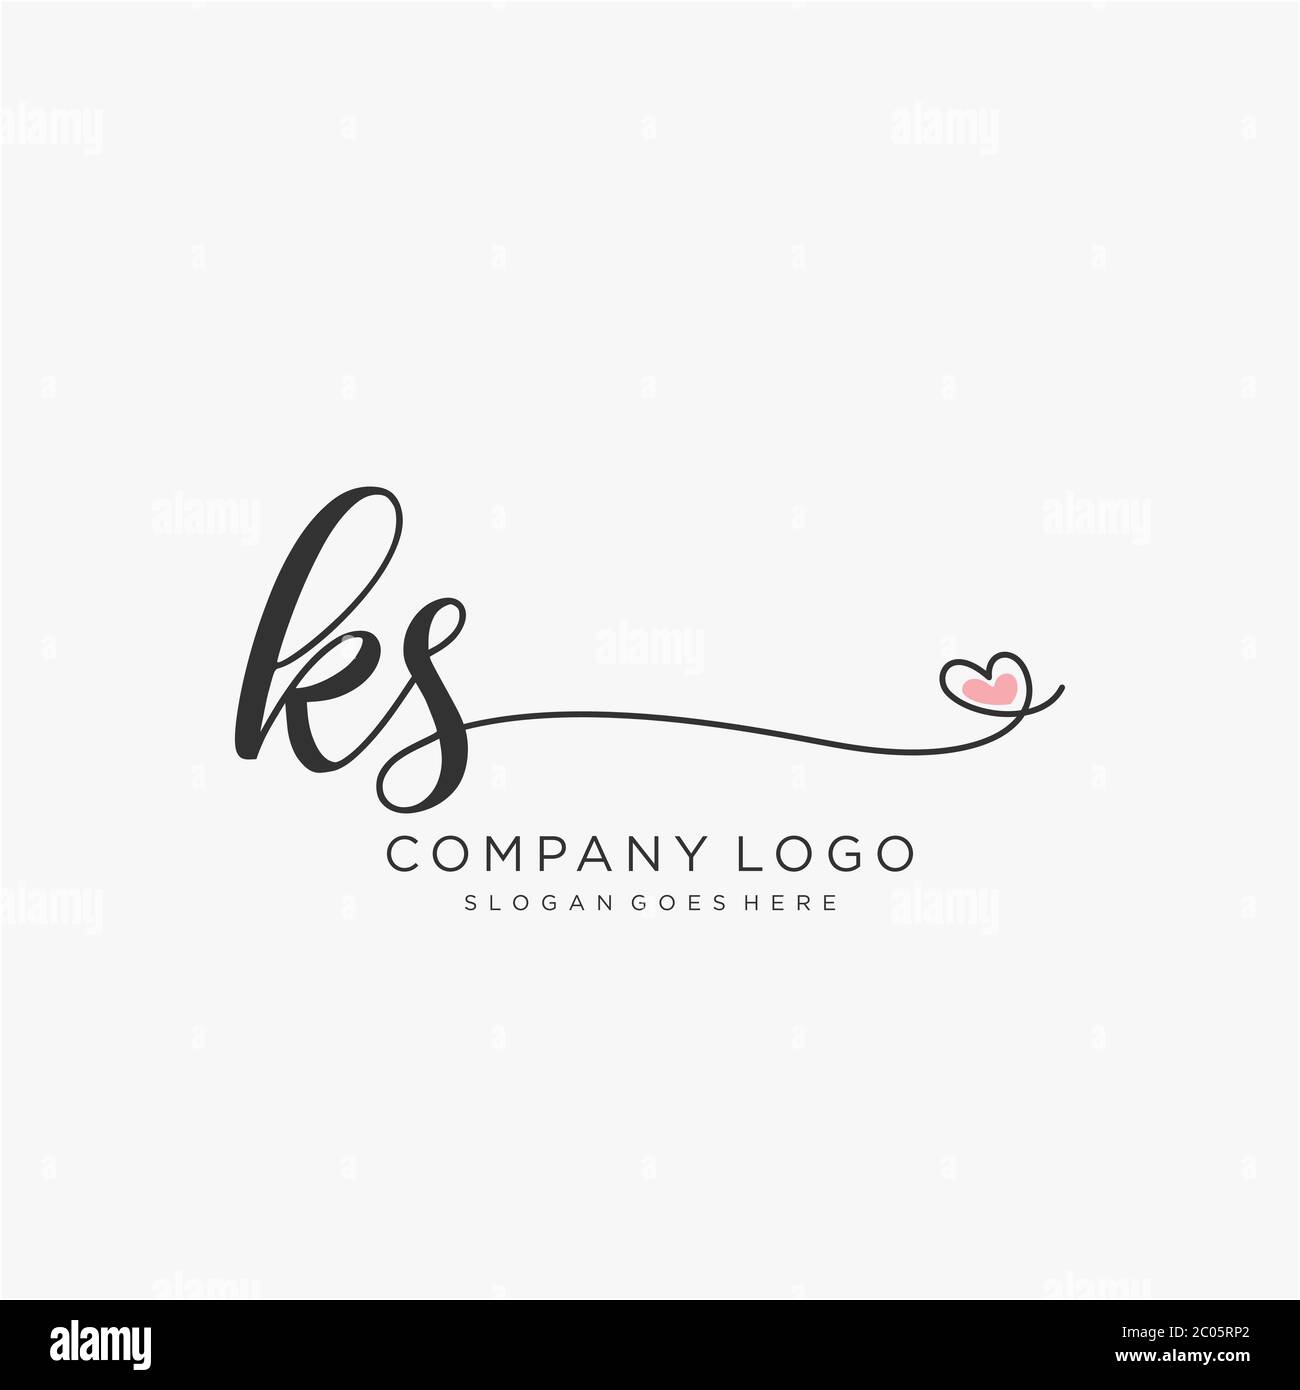 KS Initial handwriting logo design with circle. Beautyful design logo for fashion, team, wedding, luxury logo. Stock Vector